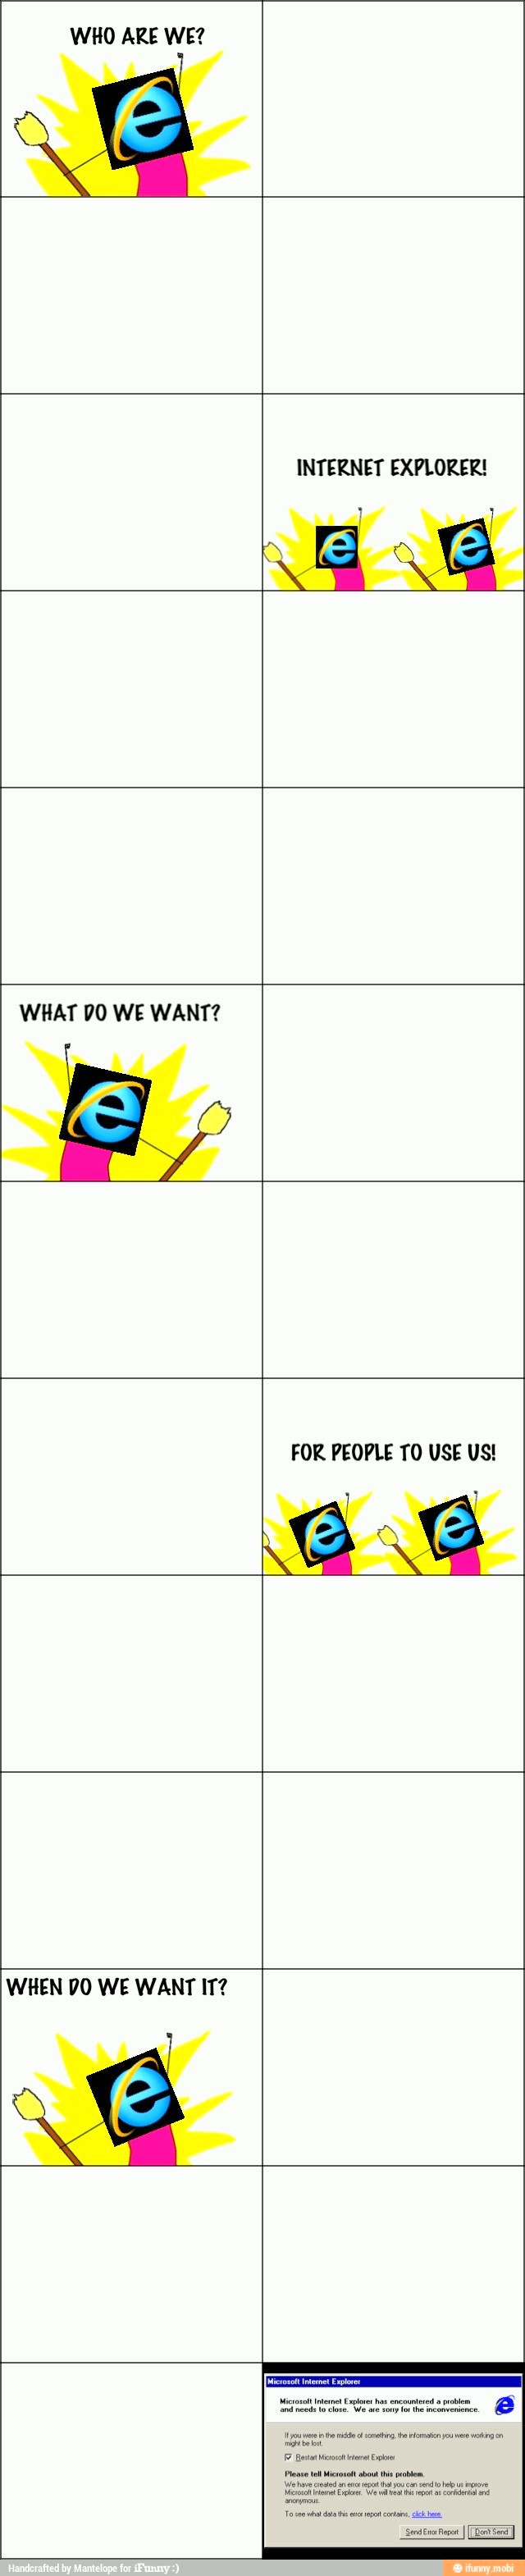 Internet Explorer sucks - meme